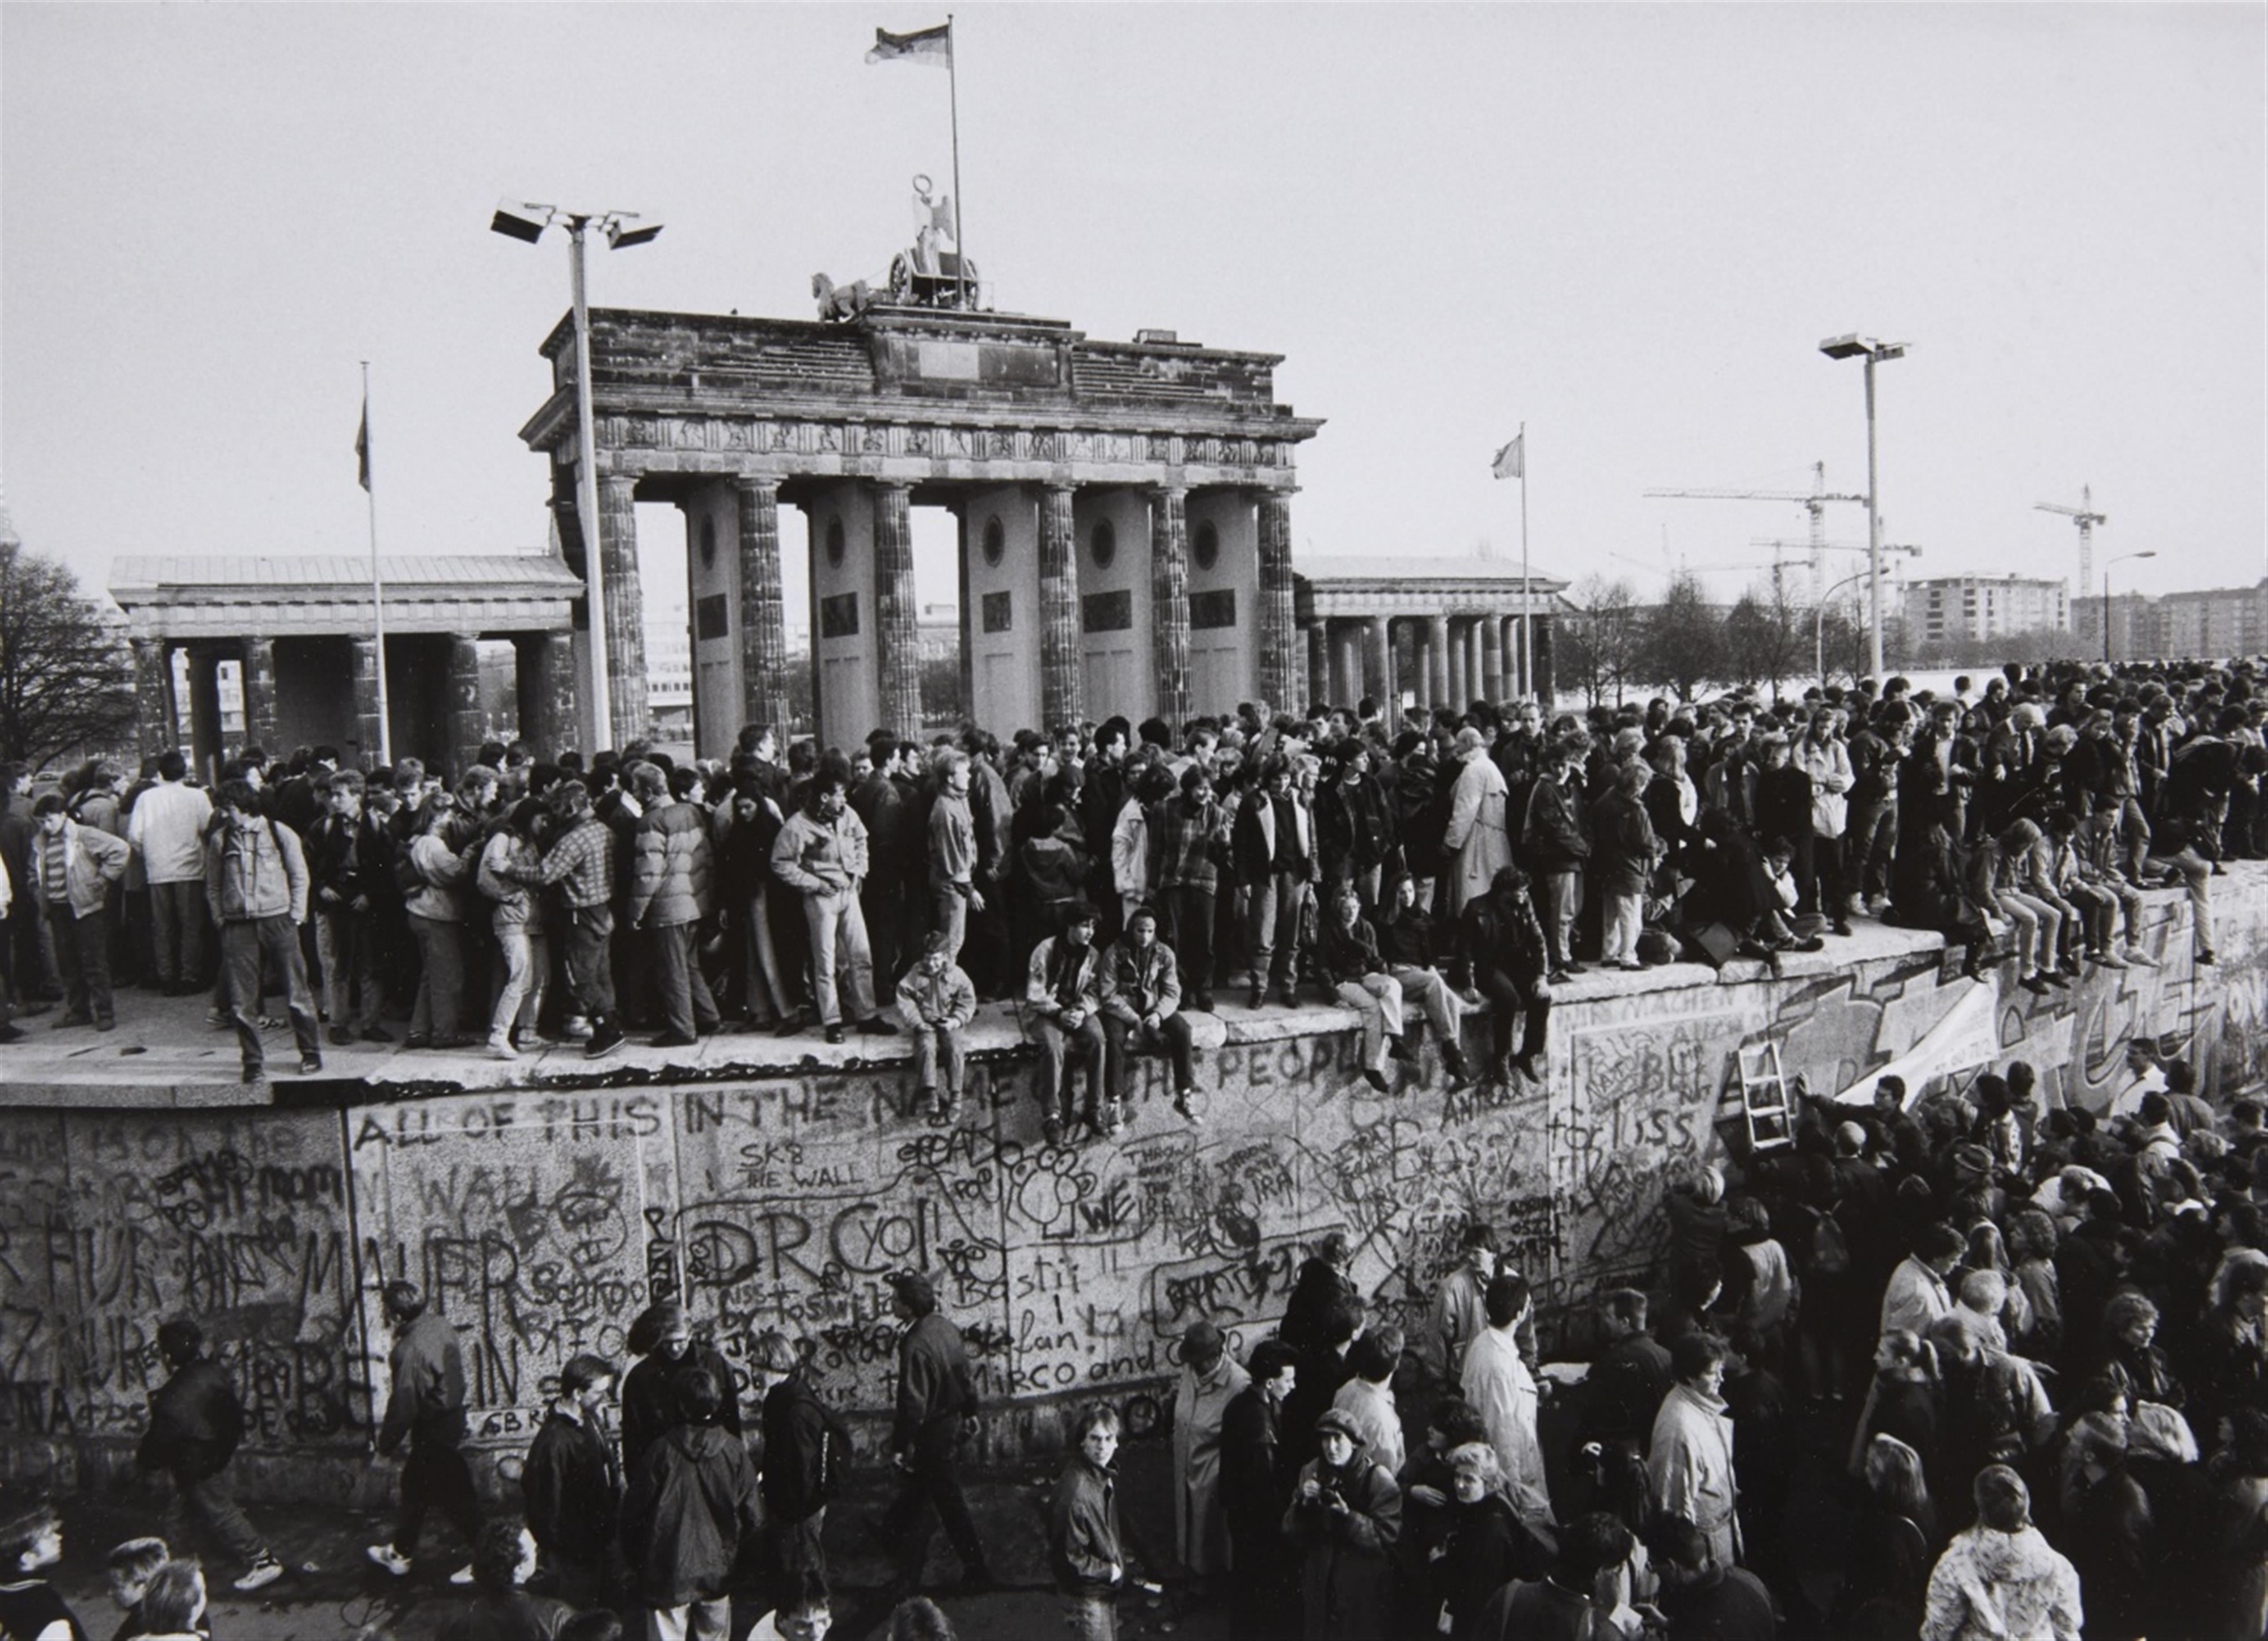 Barbara Klemm - Fall der Mauer. Brandenburger Tor, Berlin, 10. November 1989 (Fall of the Wall, Brandenburg Gate, Berlin, 10th November 1989) - image-1